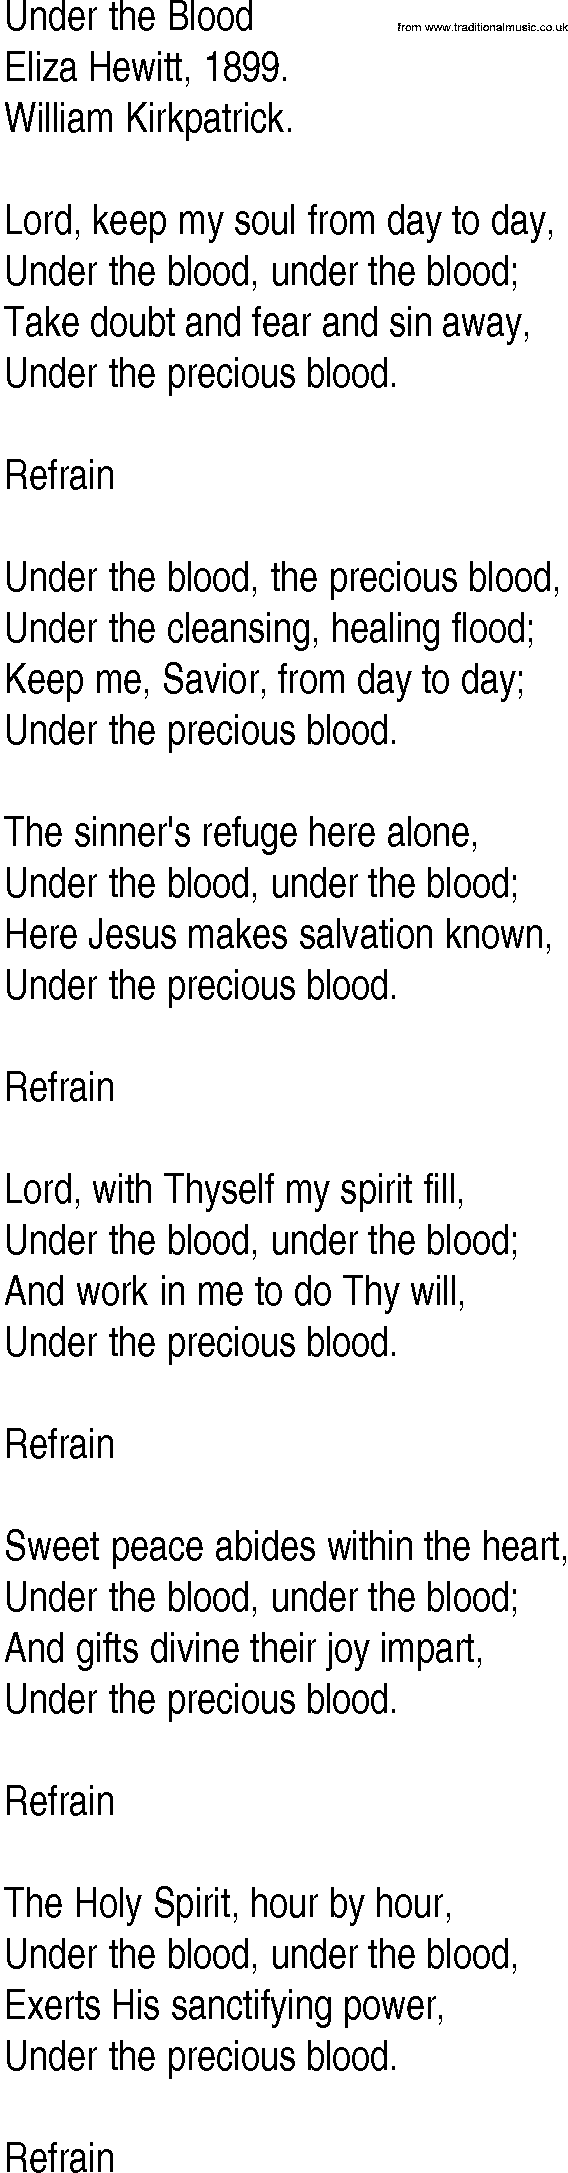 Hymn and Gospel Song: Under the Blood by Eliza Hewitt lyrics